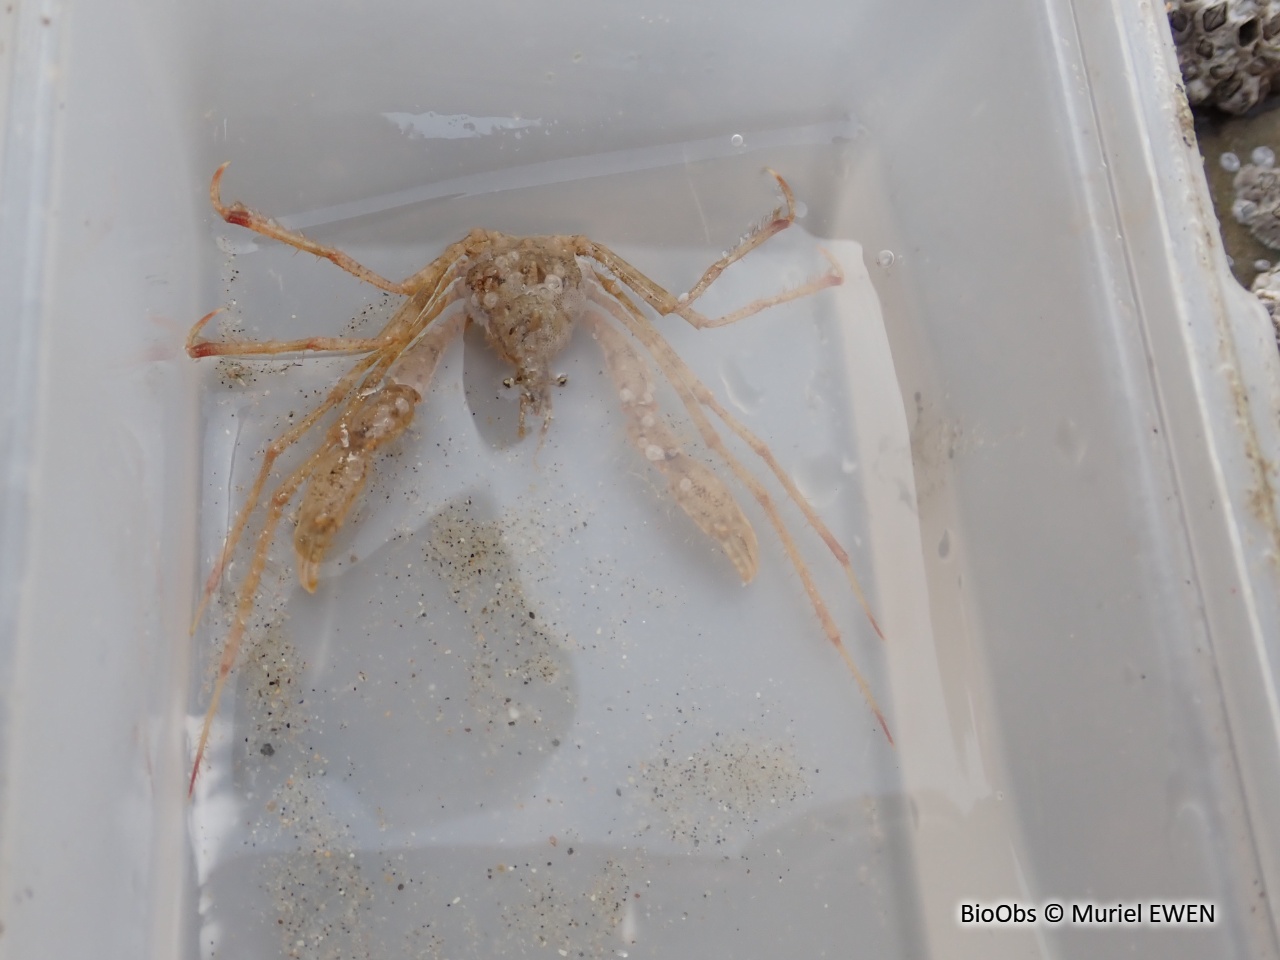 Crabe-araignée scorpion - Inachus dorsettensis - Muriel EWEN - BioObs